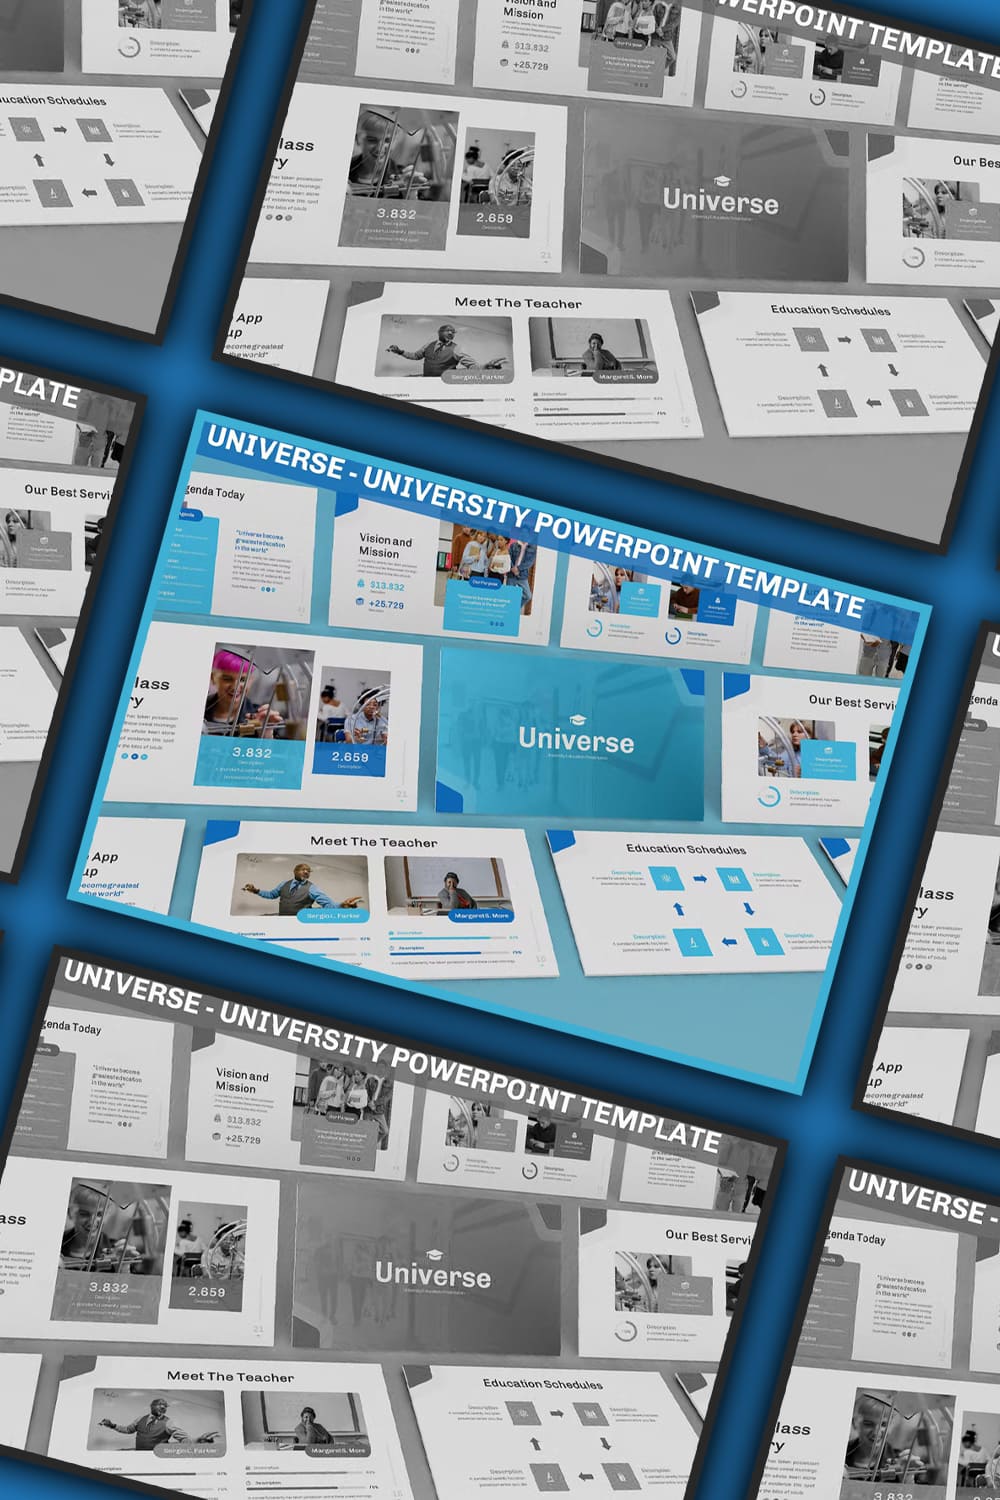 Universe University Powerpoint Template - pinterest image preview.